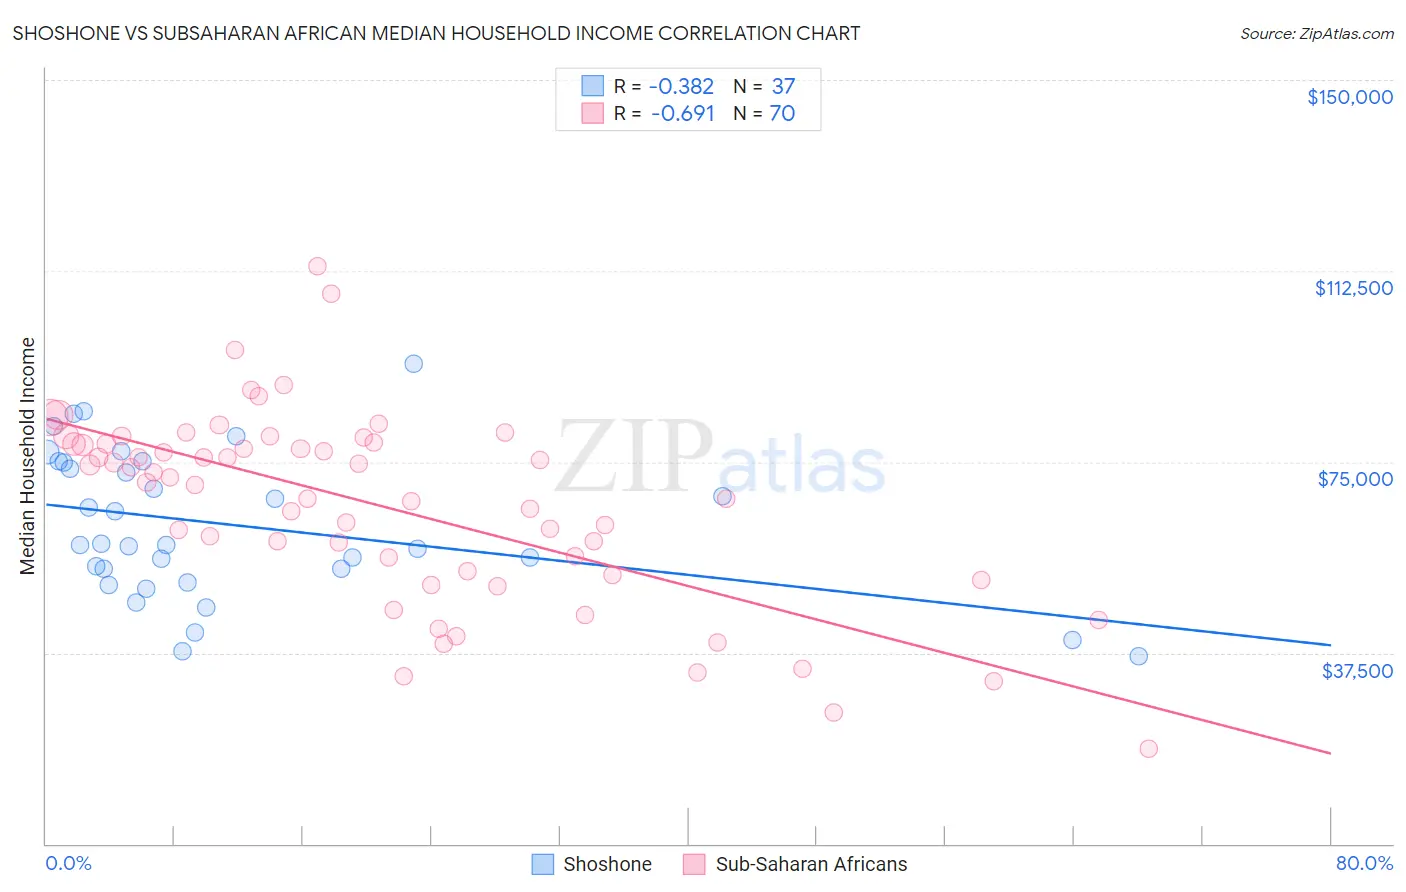 Shoshone vs Subsaharan African Median Household Income